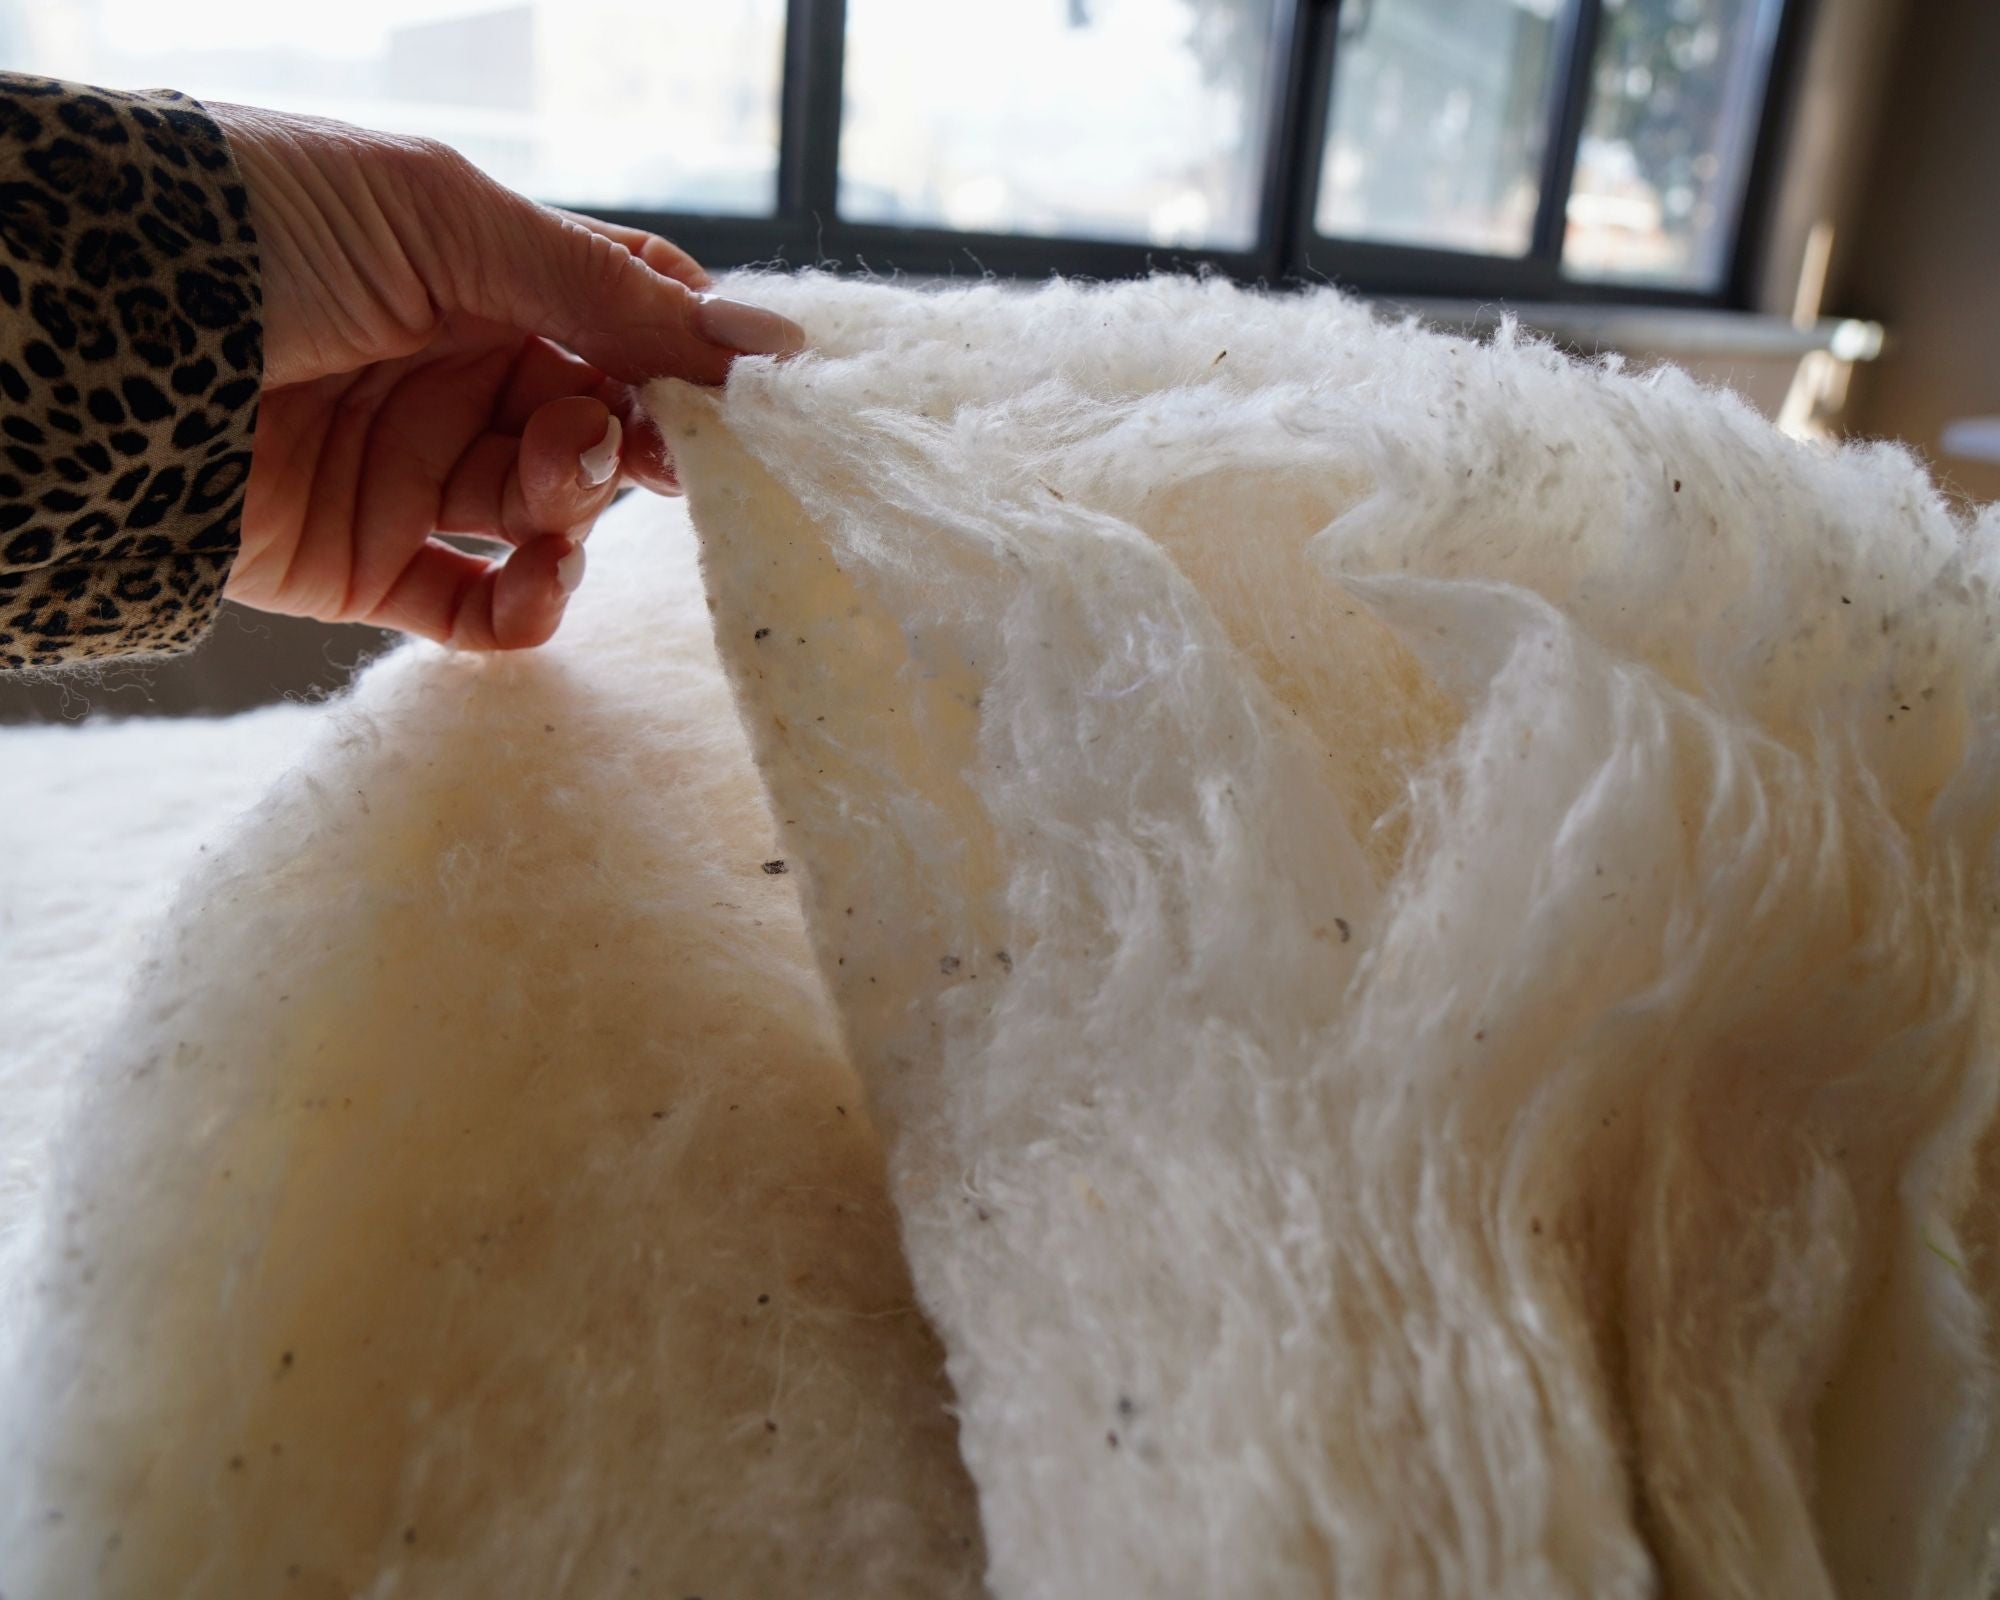 Futon cotone lana